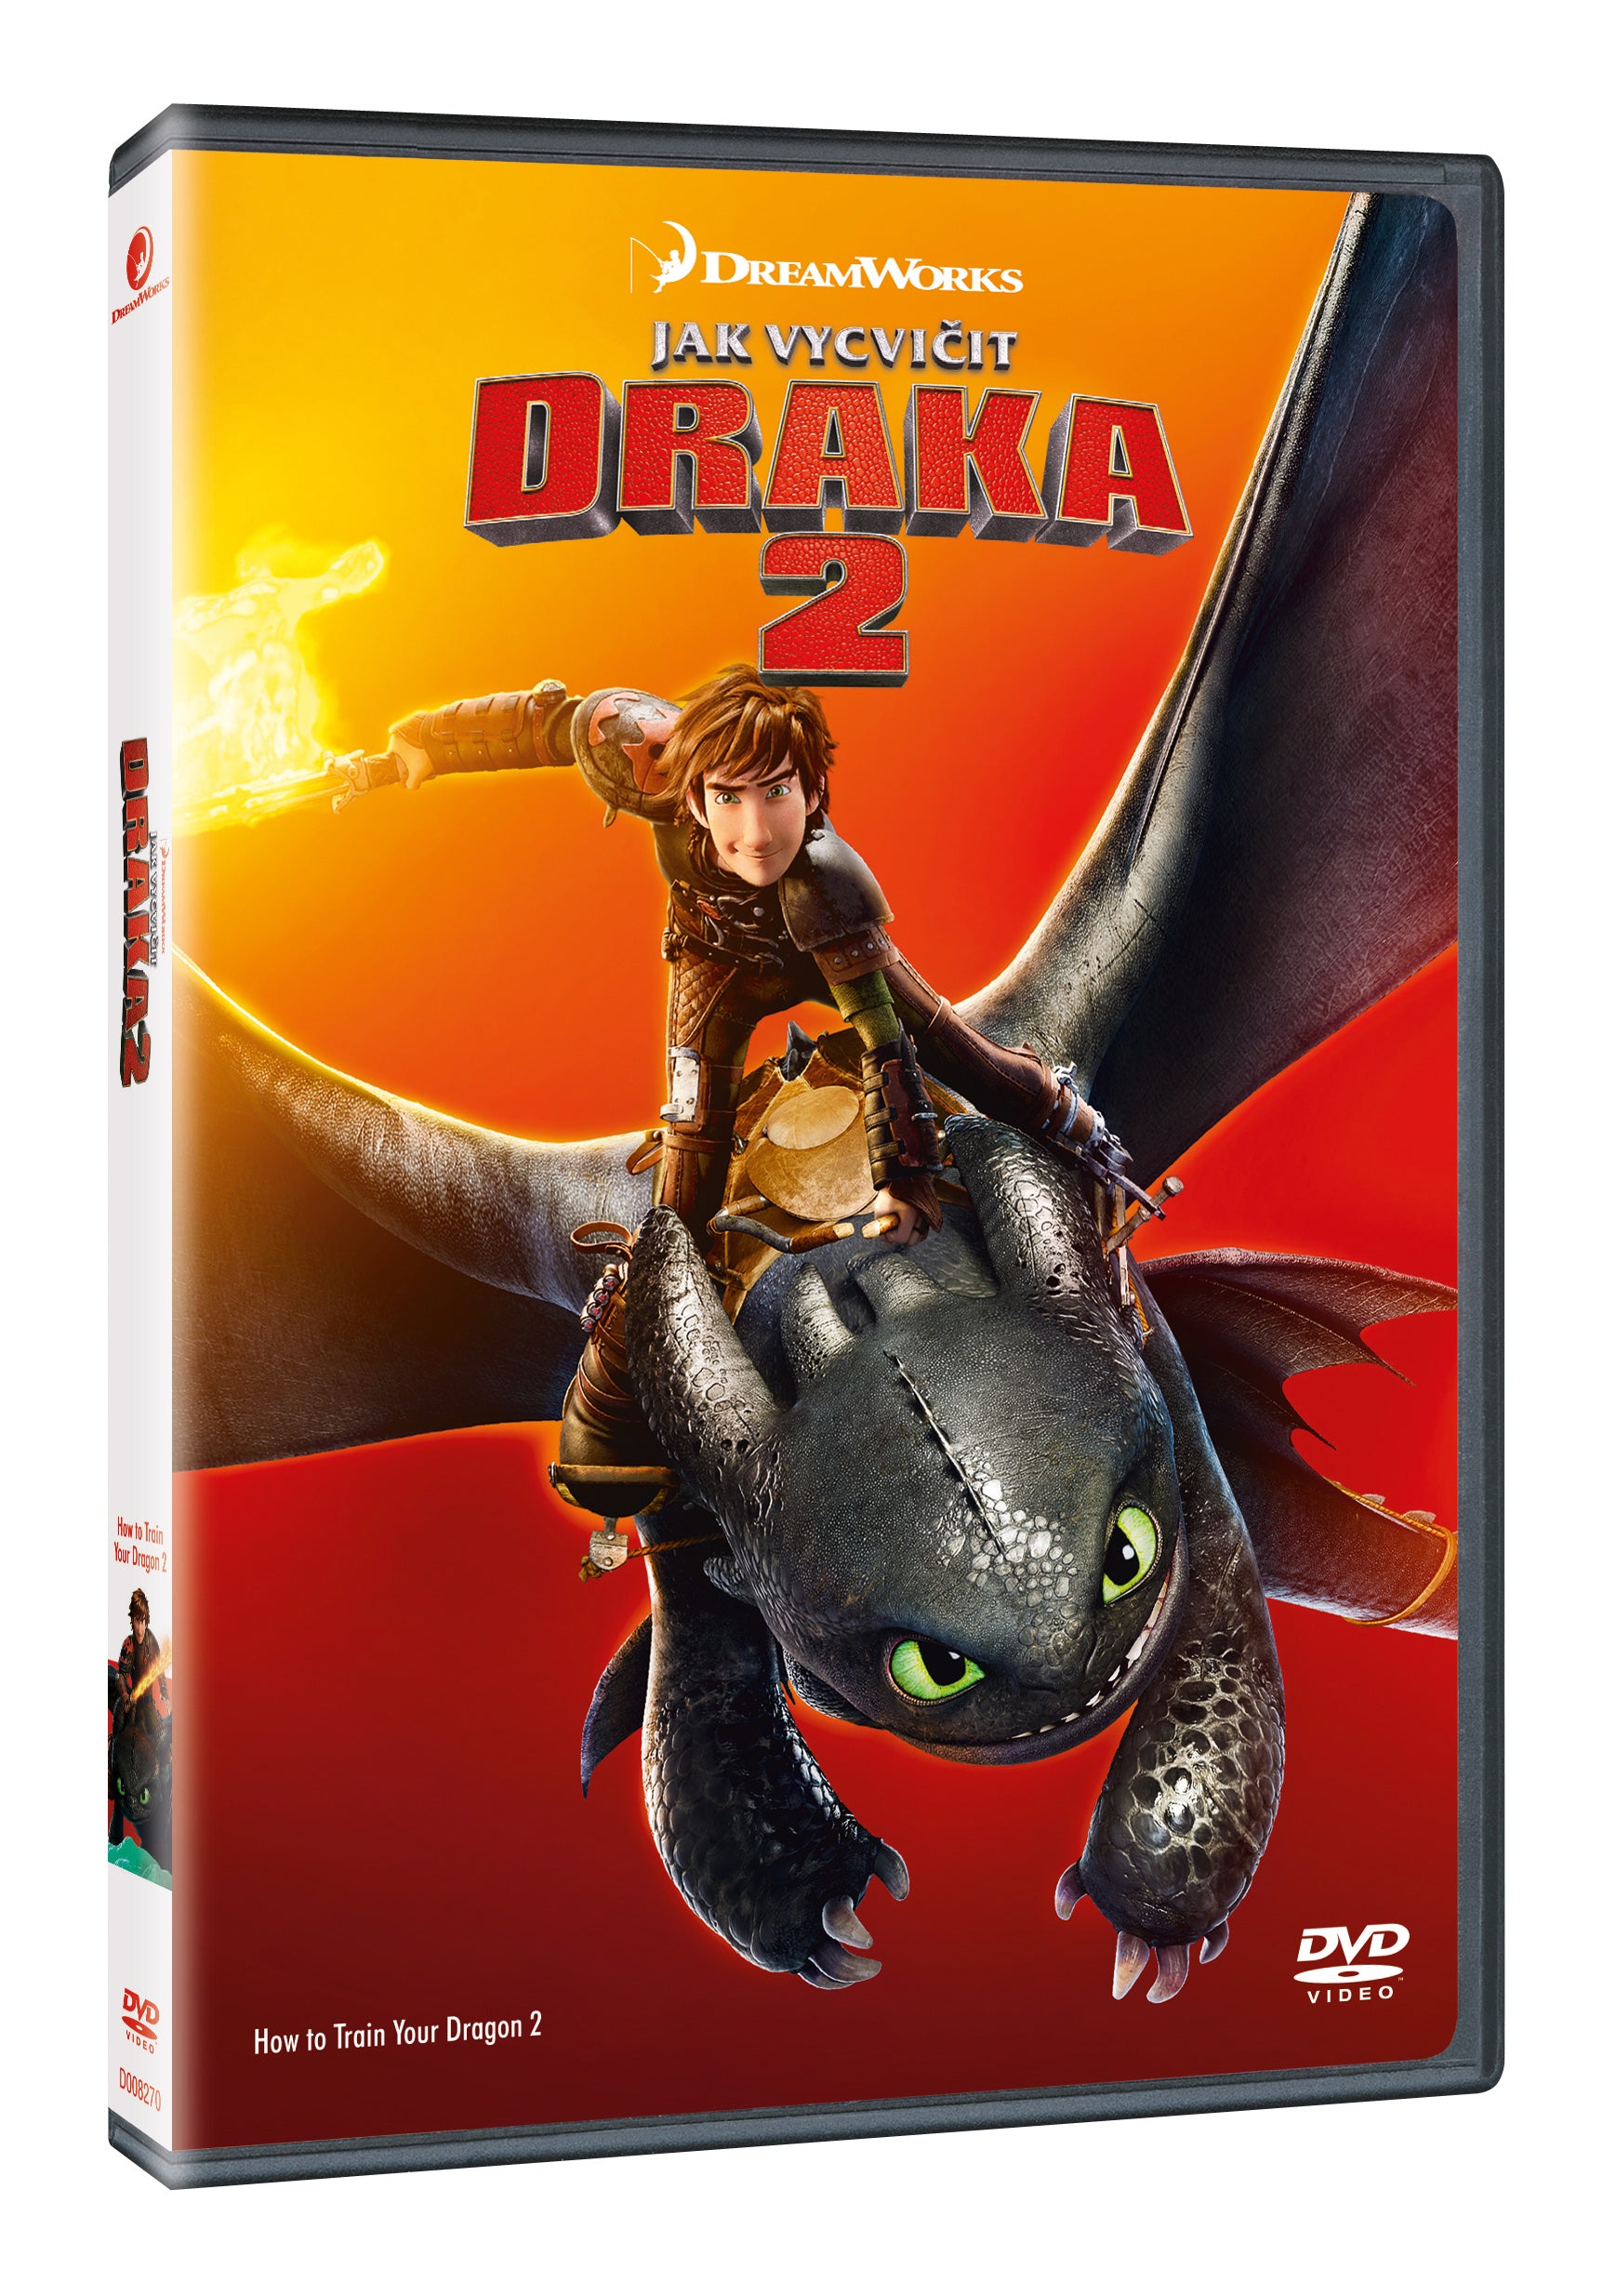 Jak vycvicit draka 2 DVD / How to Train Your Dragon 2